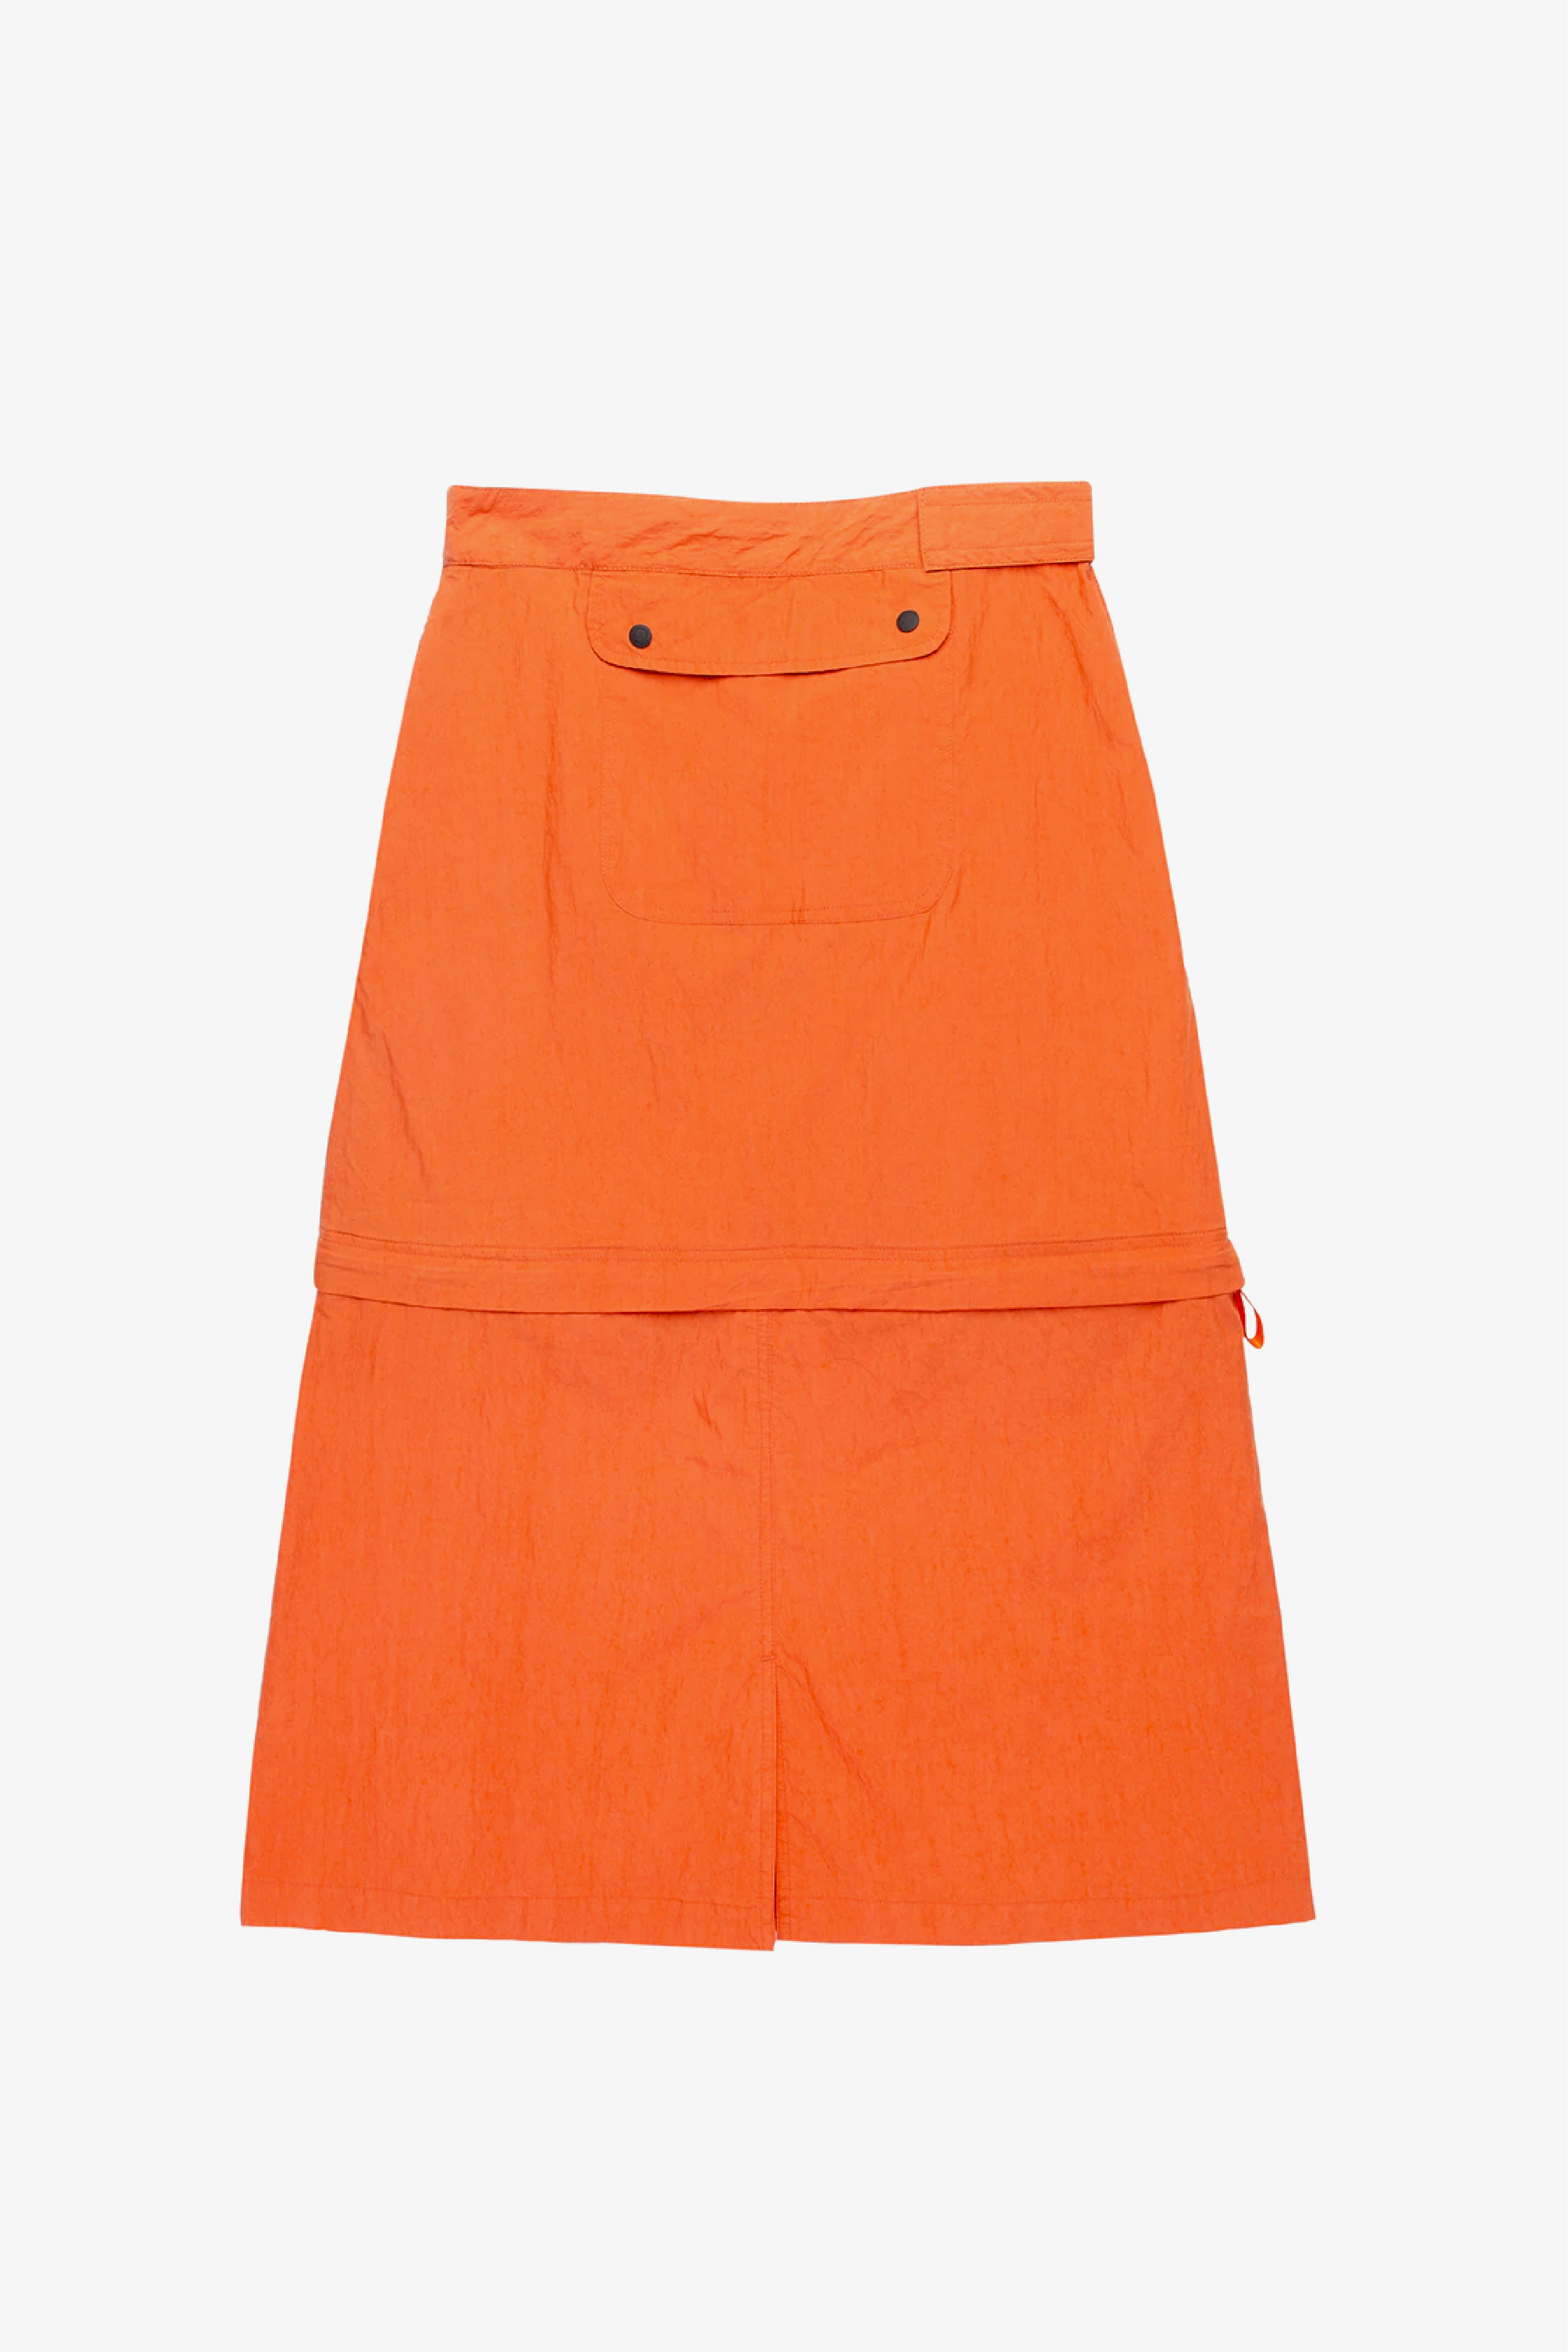 Selectshop FRAME - BRAIN DEAD Washed Convertible Skirt Bottoms Dubai